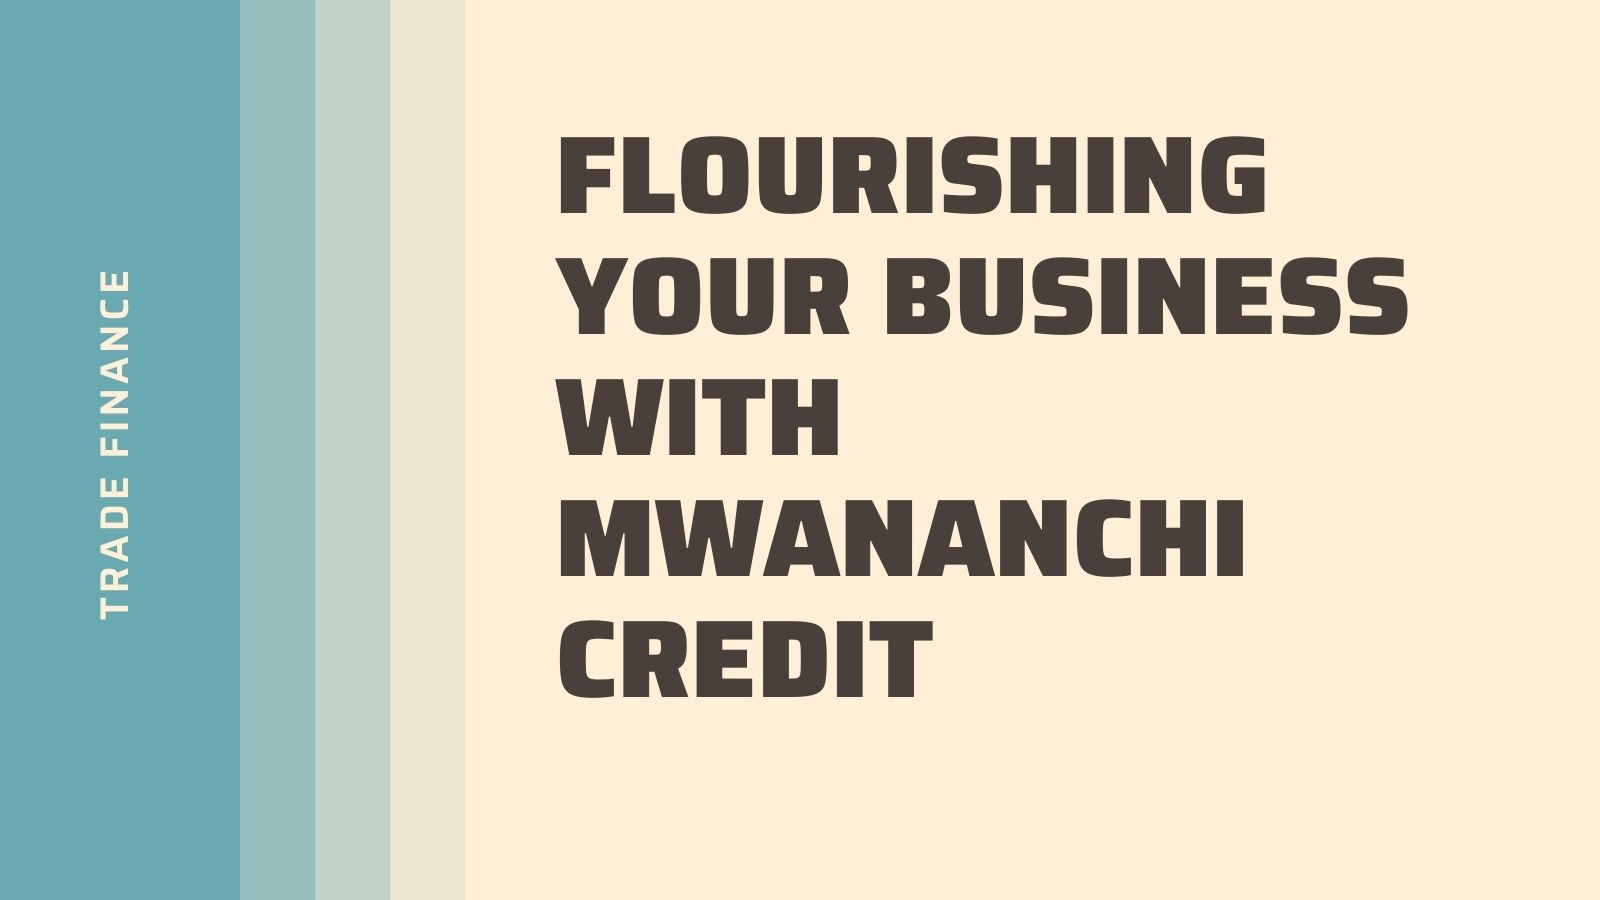 Trade Finance: Flourishing Your Business With Mwananchi Credit